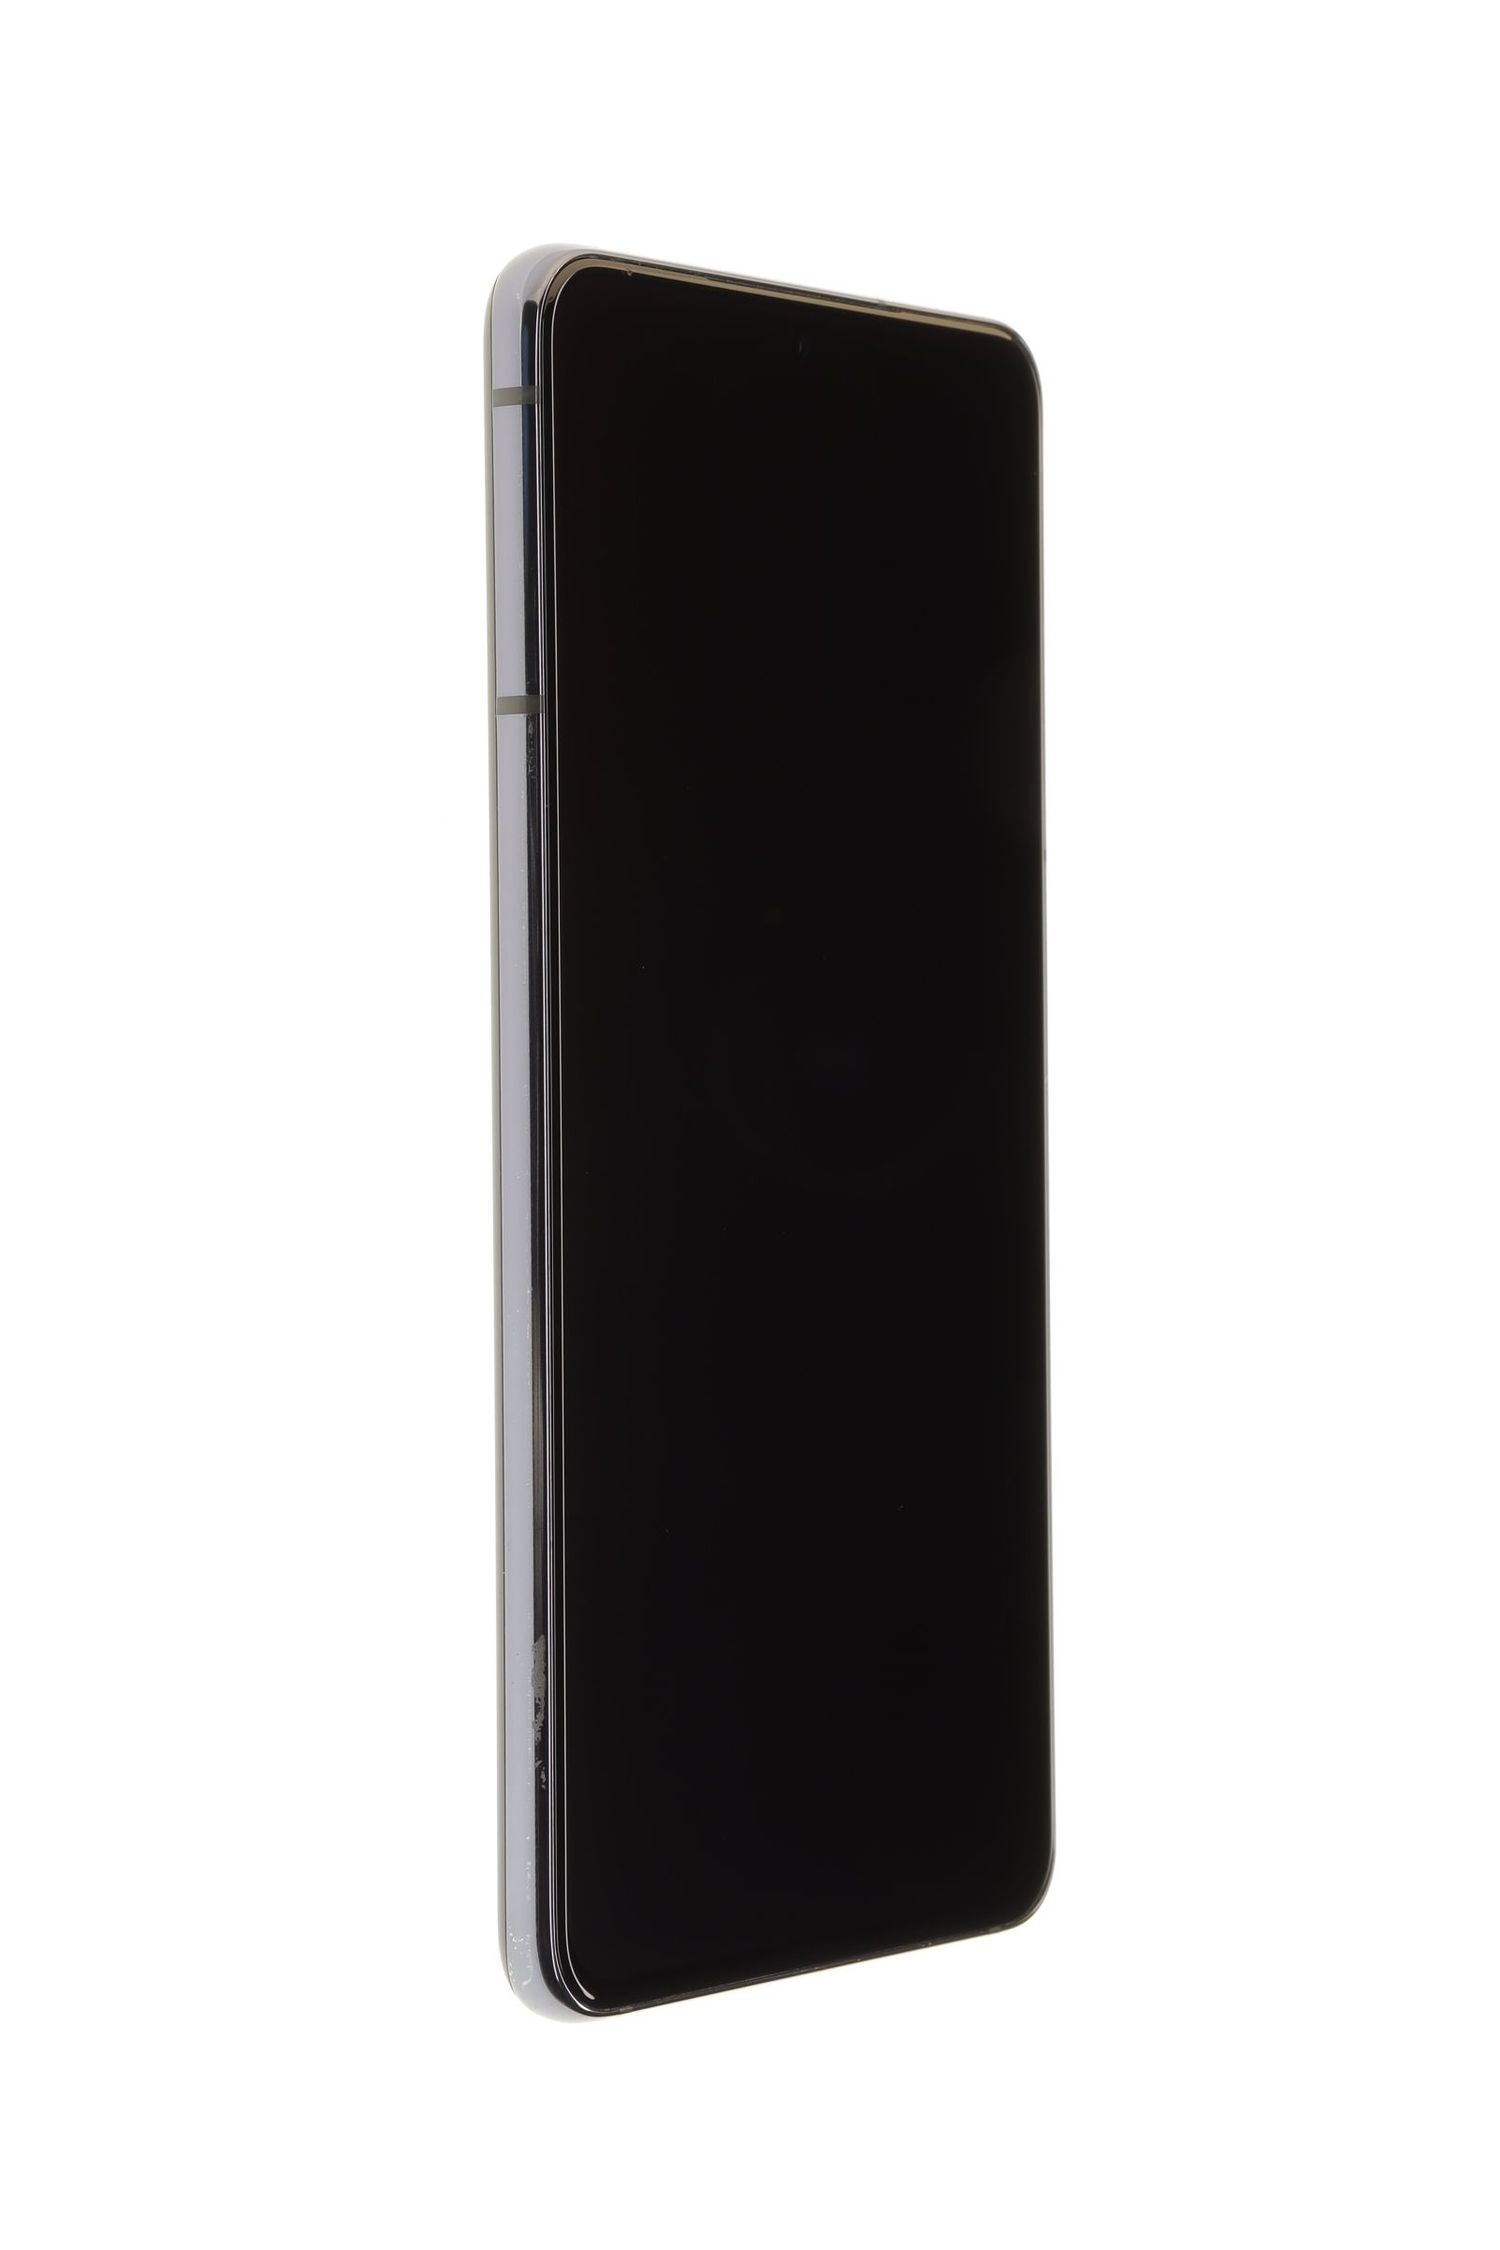 Мобилен телефон Samsung Galaxy S21 5G Dual Sim, Gray, 128 GB, Foarte Bun